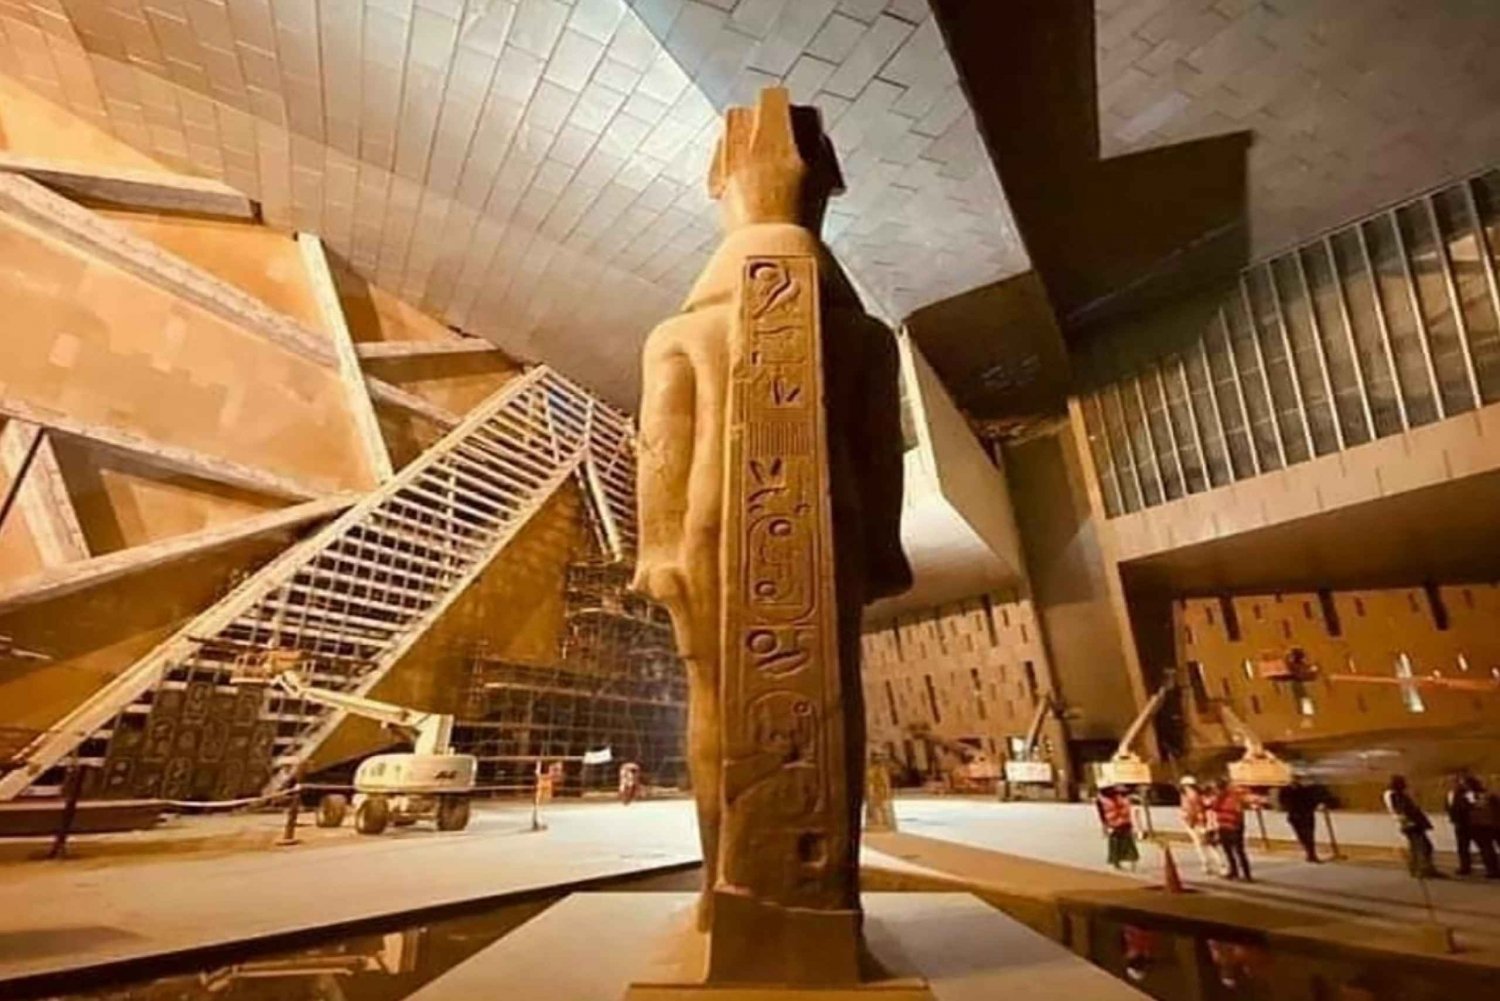 Giza: Grand Egyptian Museum, Old Cairo and Khan Al-khalili